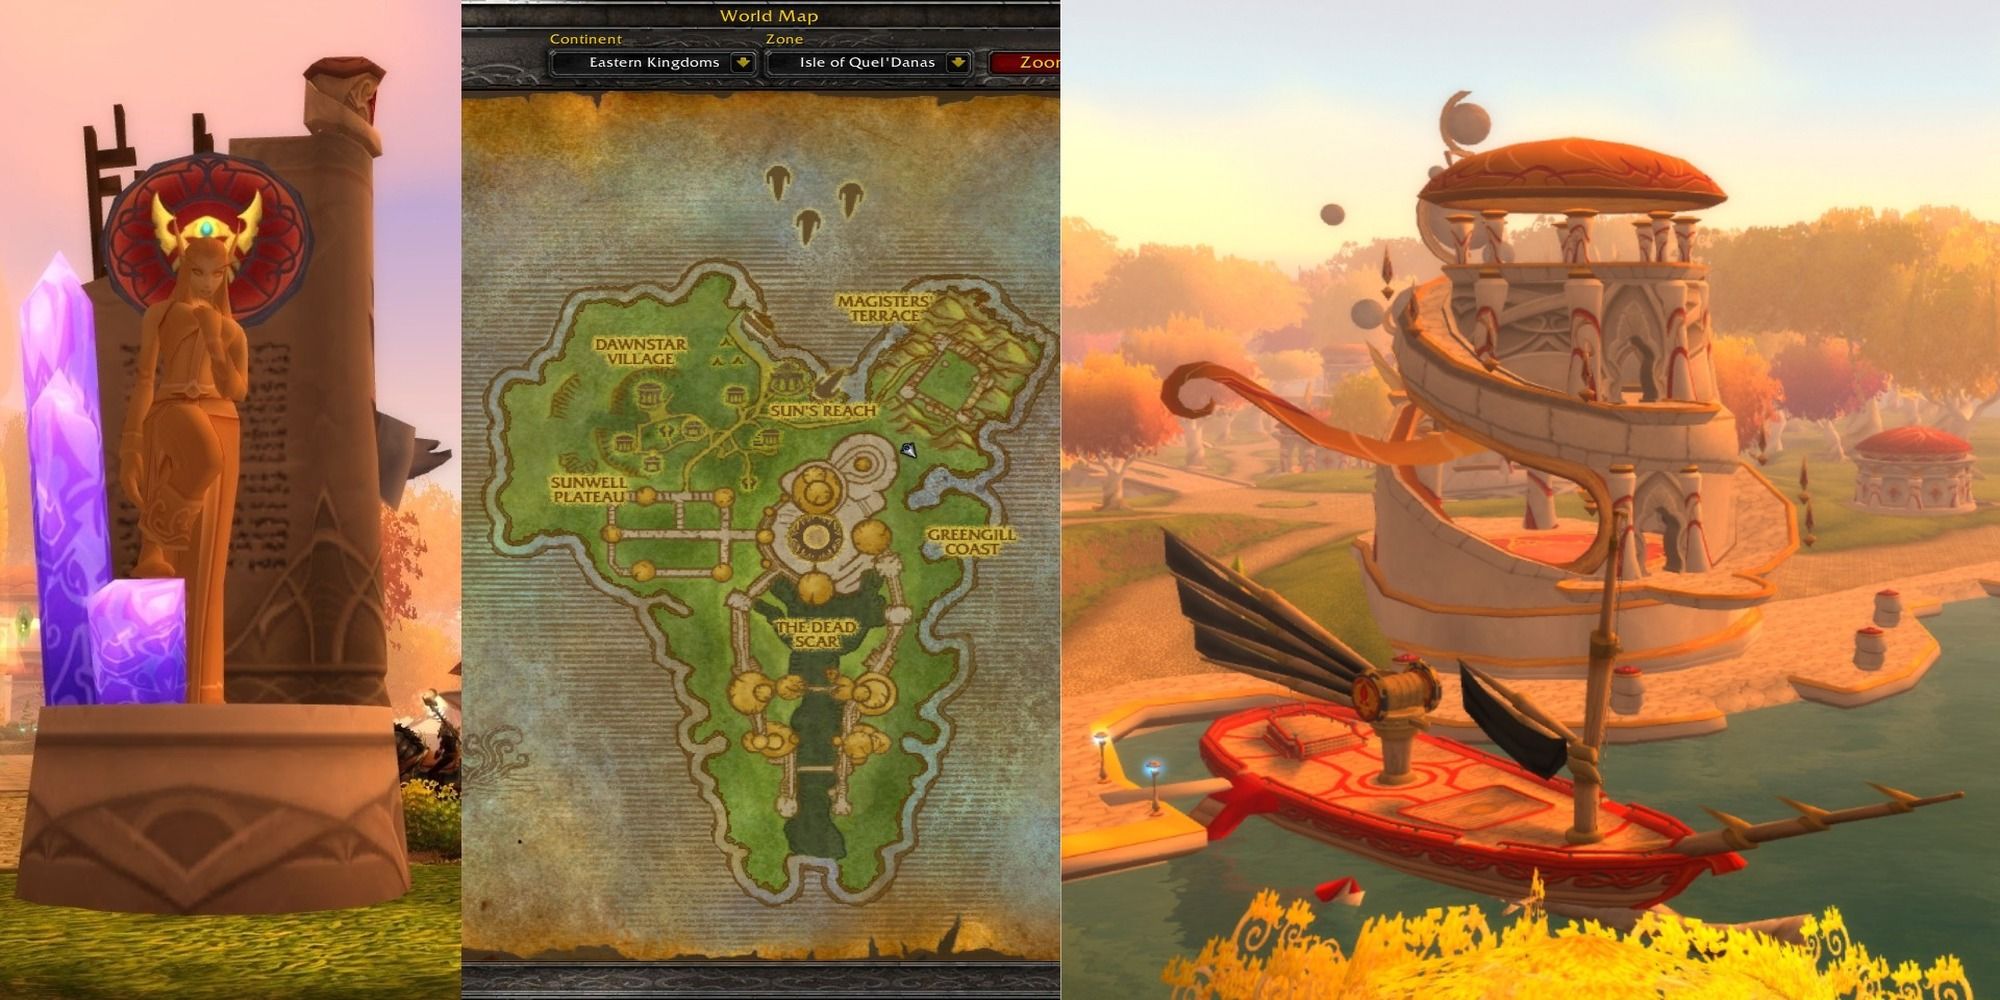 title split image most important locations Quel'Danas Classic World of Warcraft